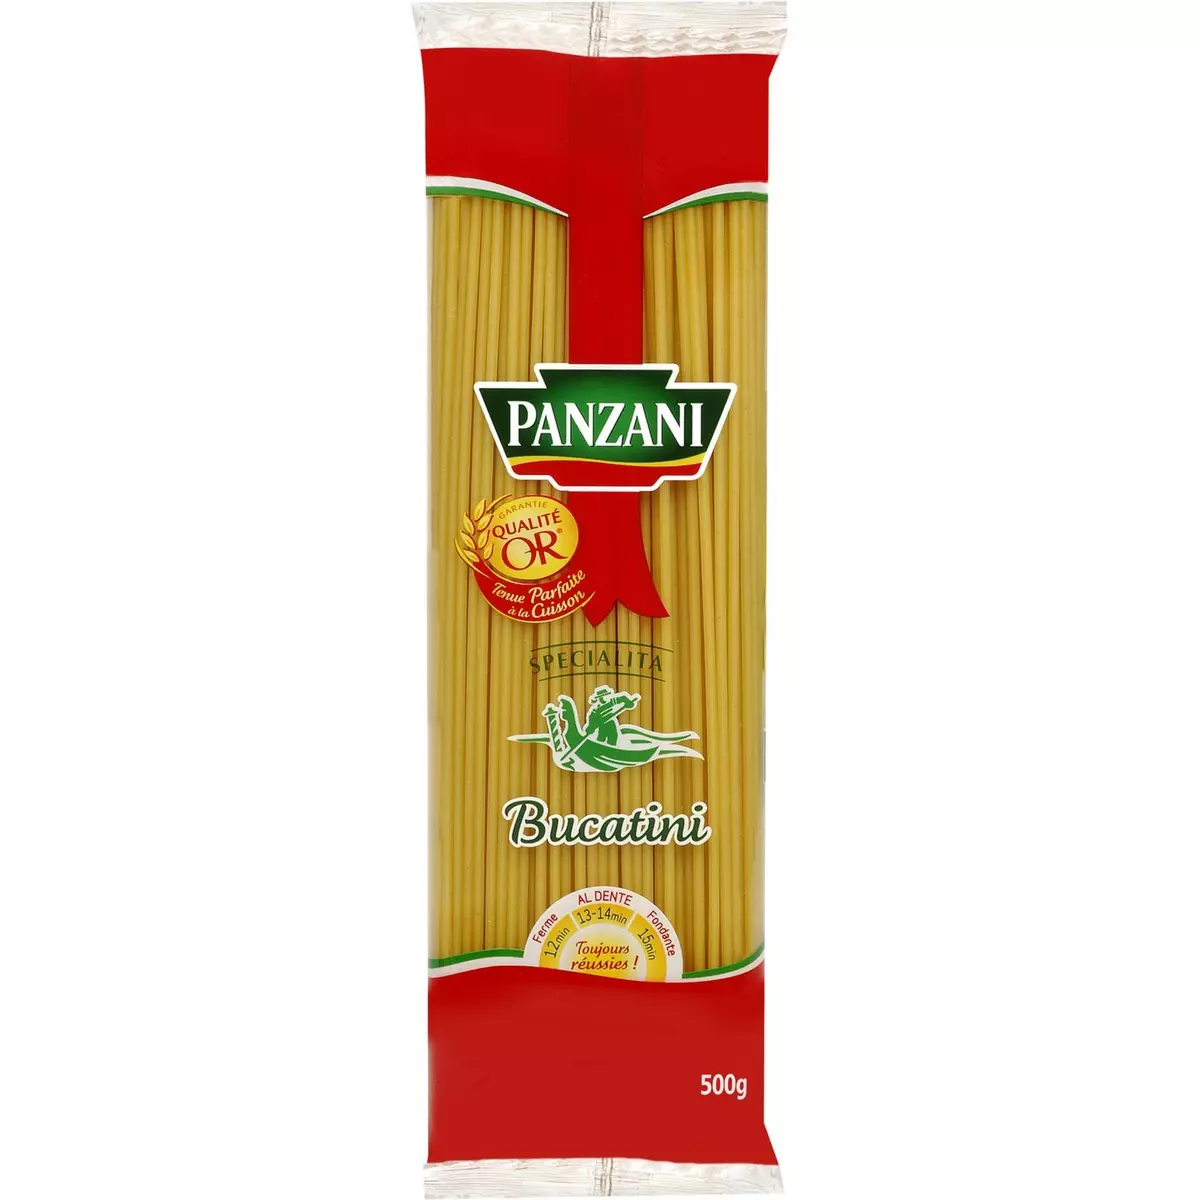 PANZANI Pâtes spécialité Bucatini 500g